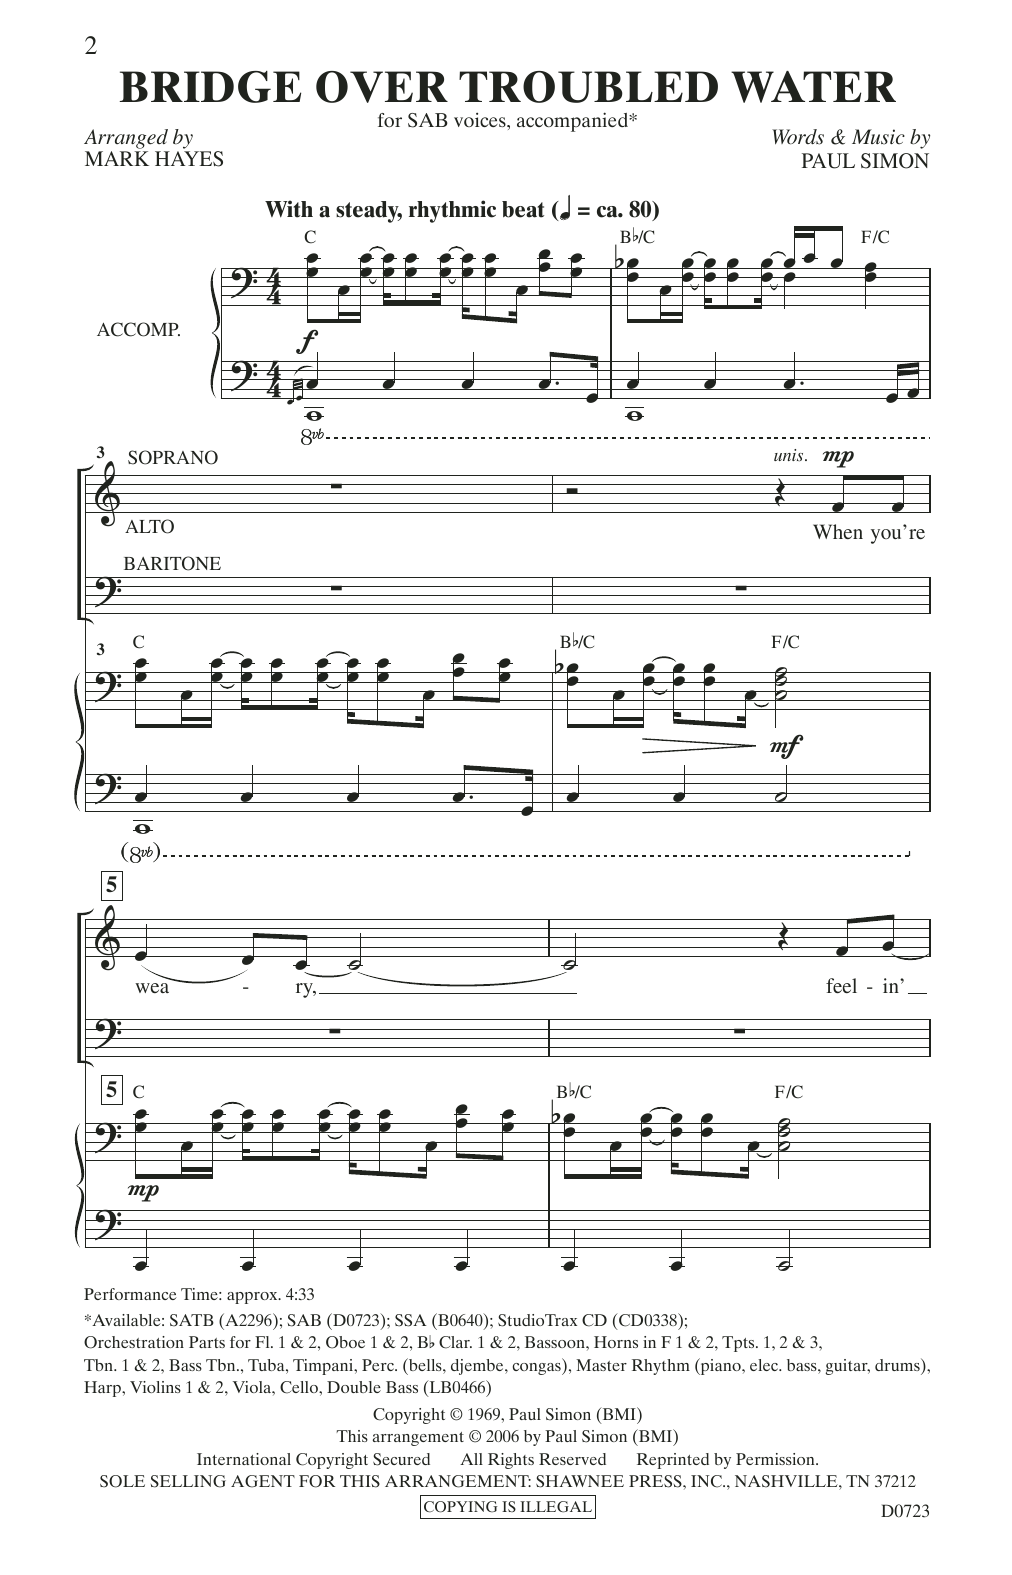 Simon & Garfunkel Bridge Over Troubled Water (arr. Mark Hayes) Sheet Music Notes & Chords for SAB Choir - Download or Print PDF